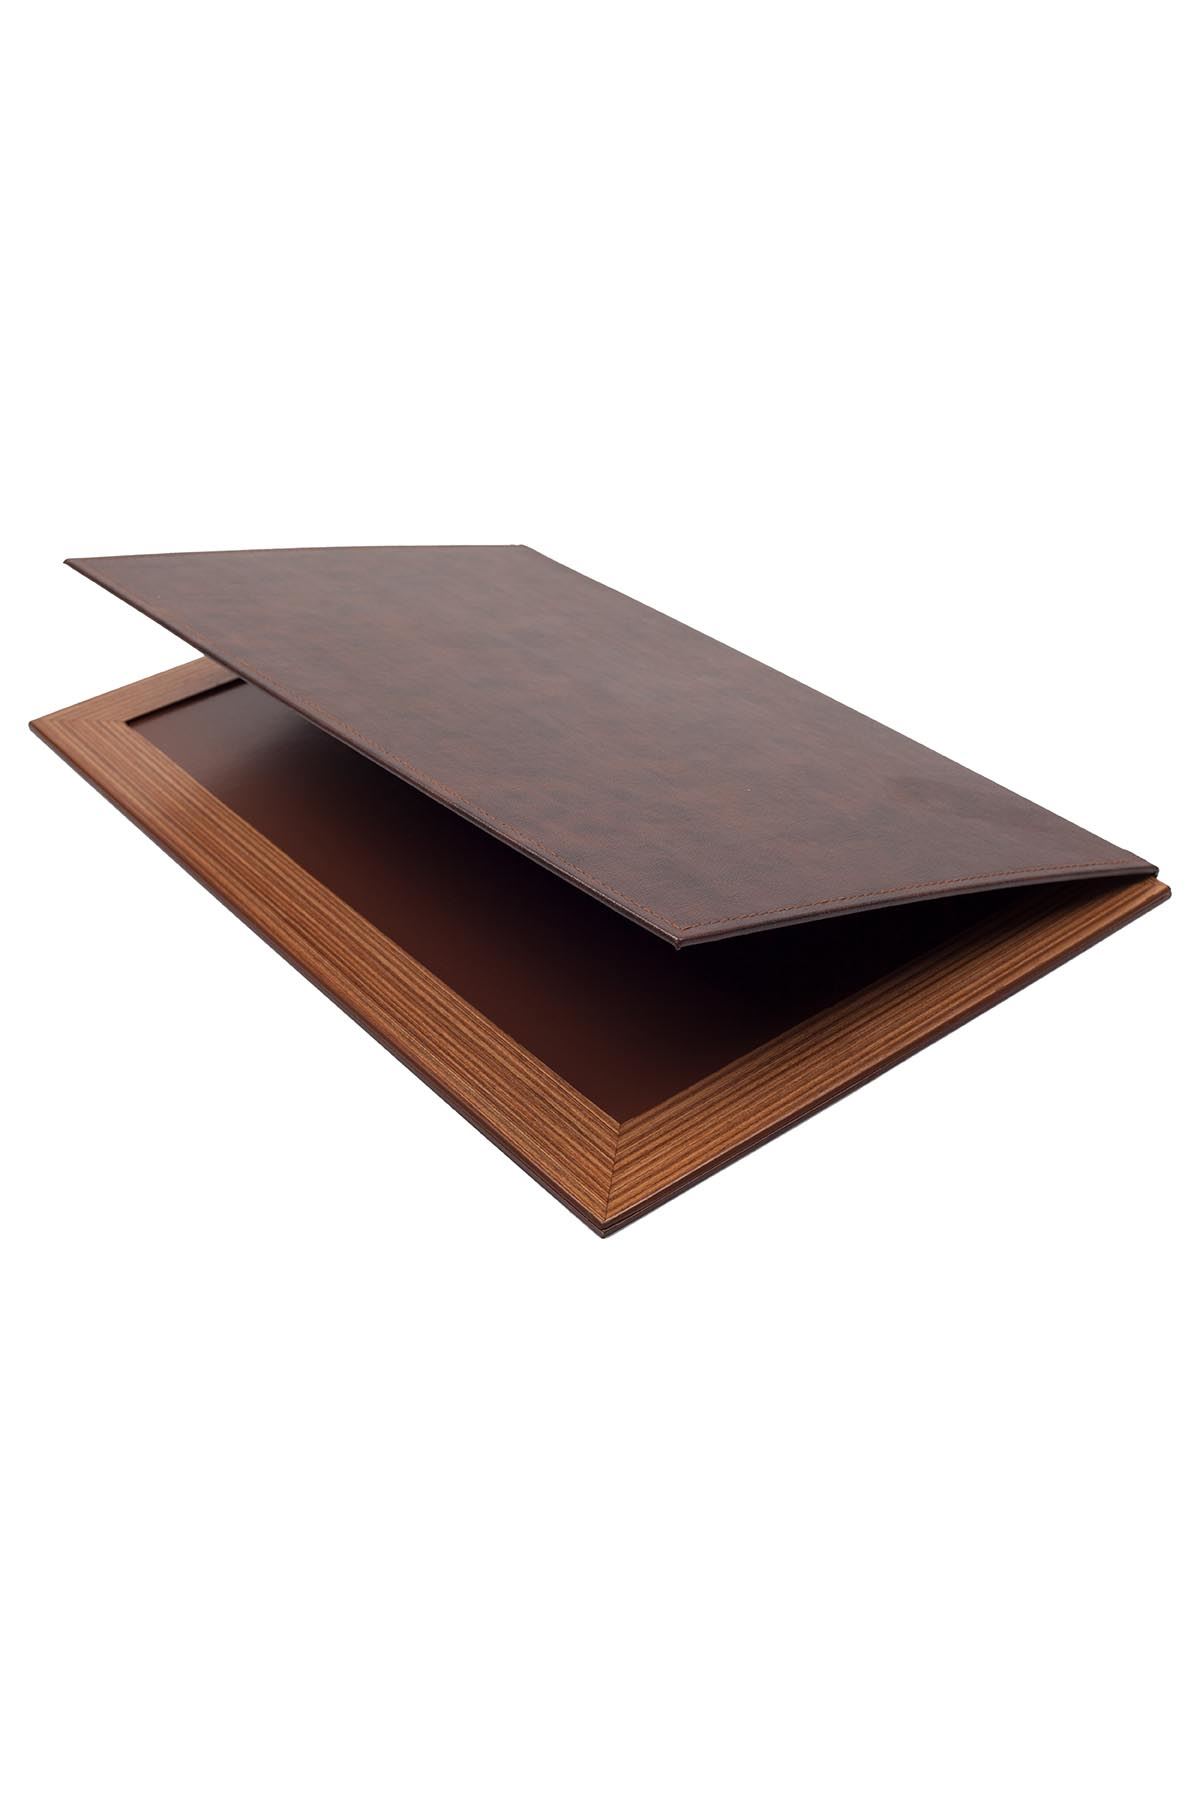 Star Lux Leather Desk Set Brown 11 Accessories